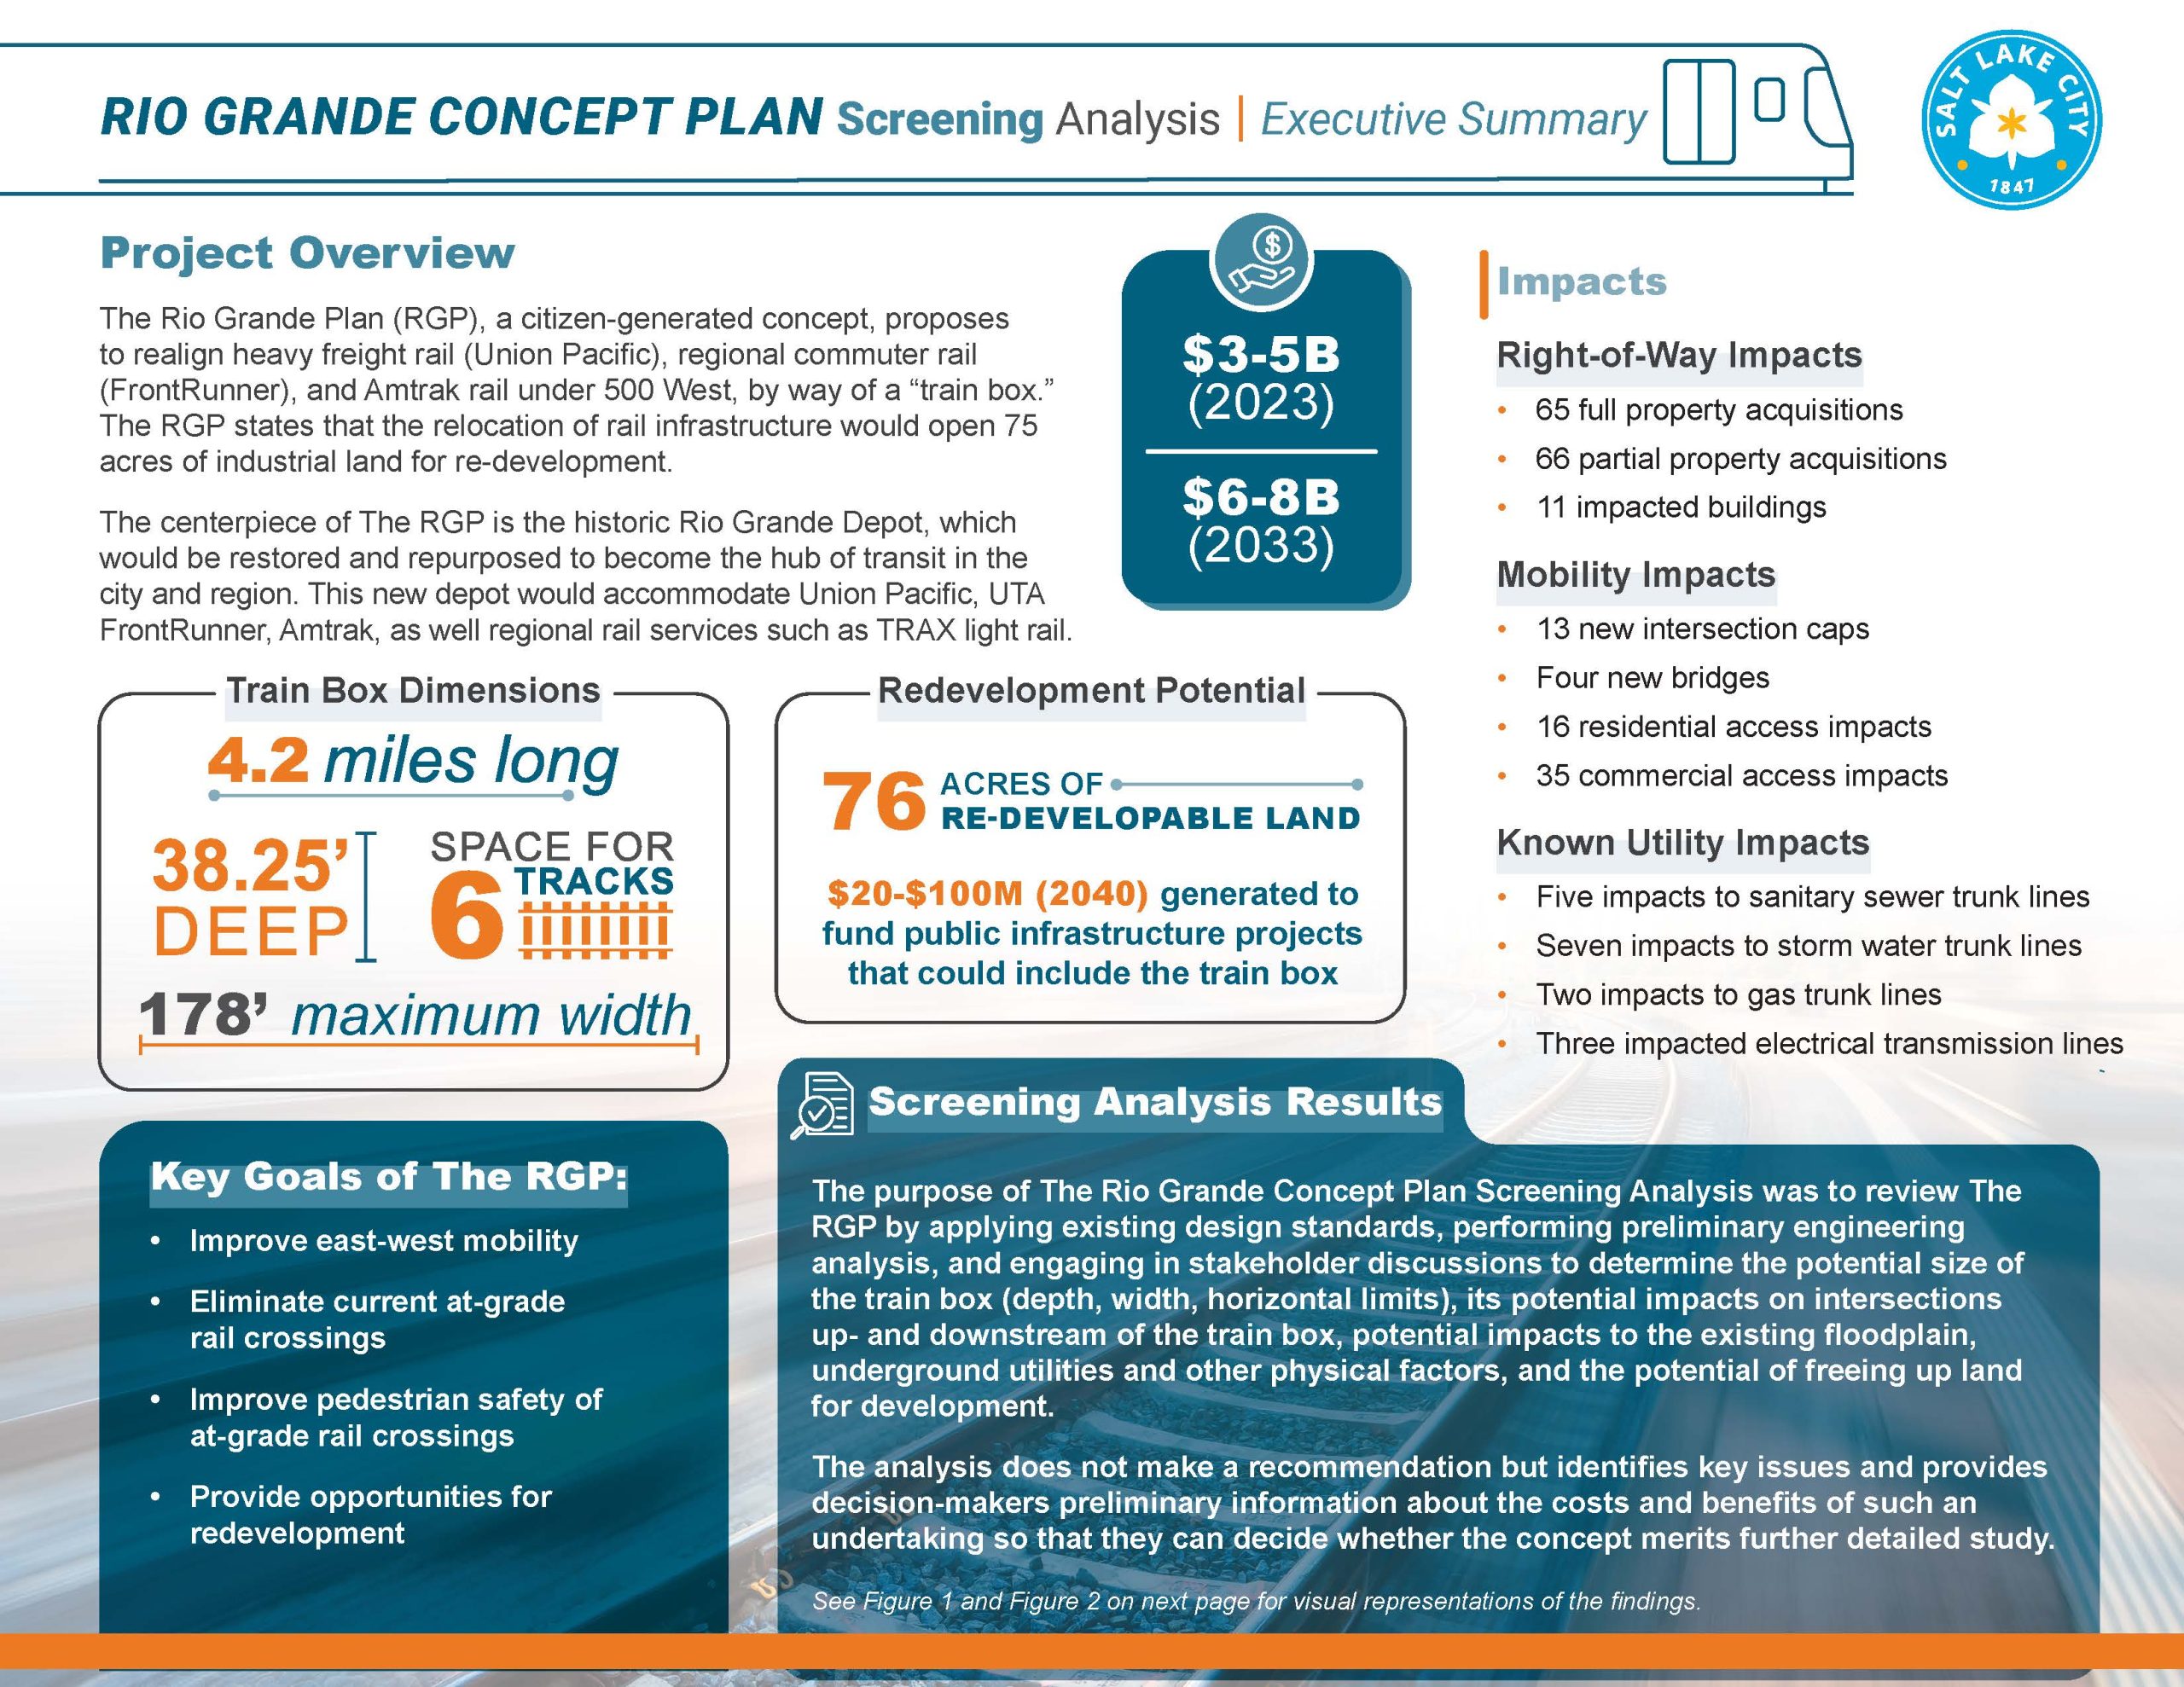 The executive summary of the Rio Grande Plan Screening Analysis